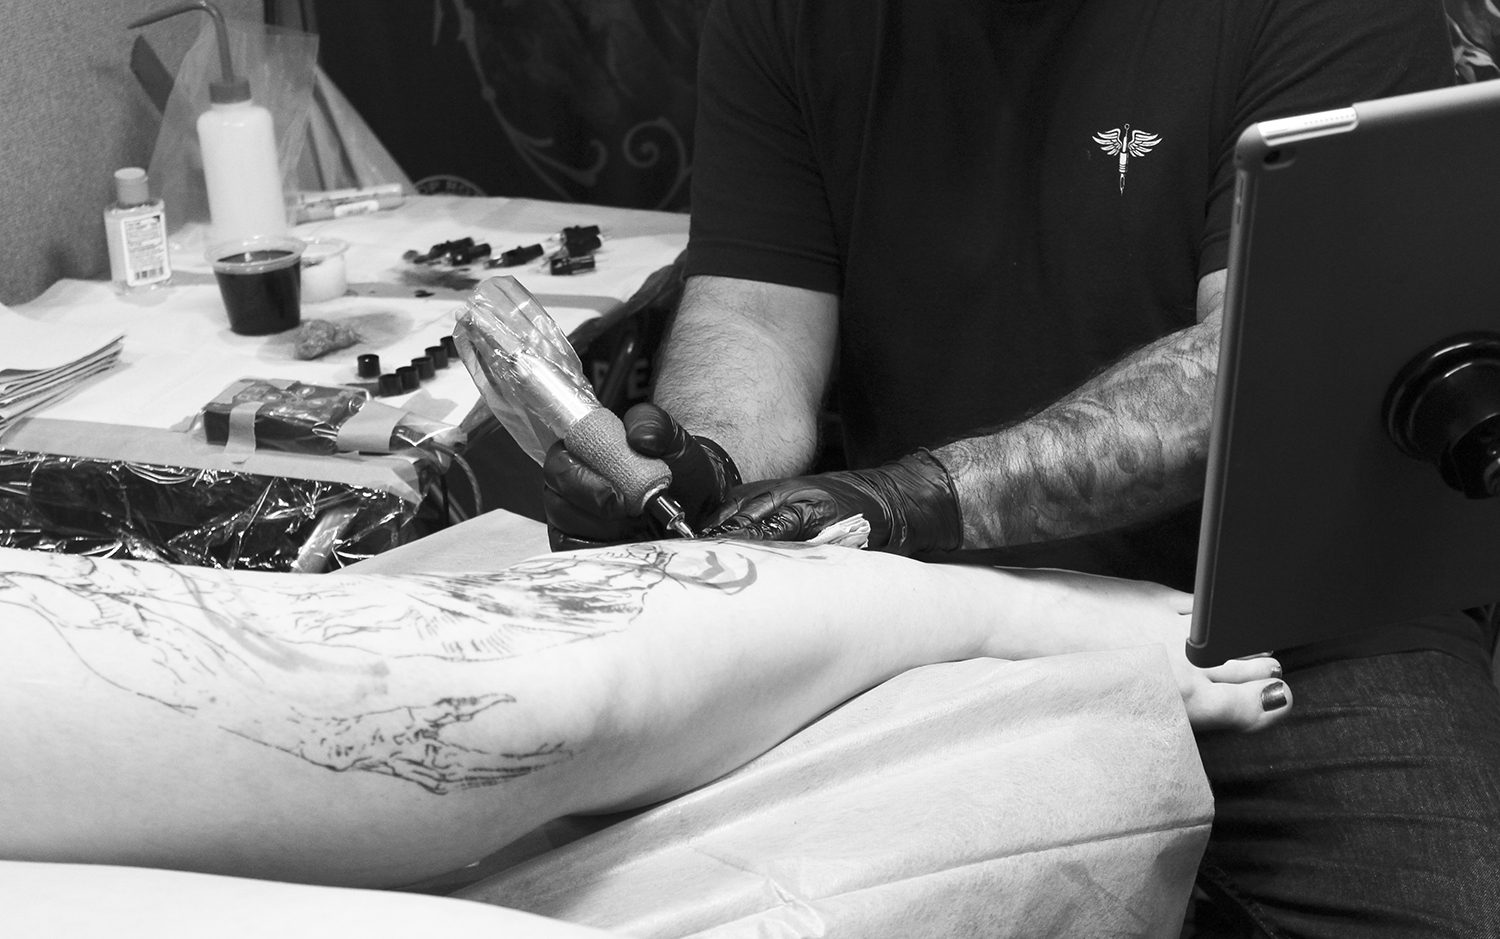 carlos torres epic tattoo on leg, london tattoo convention